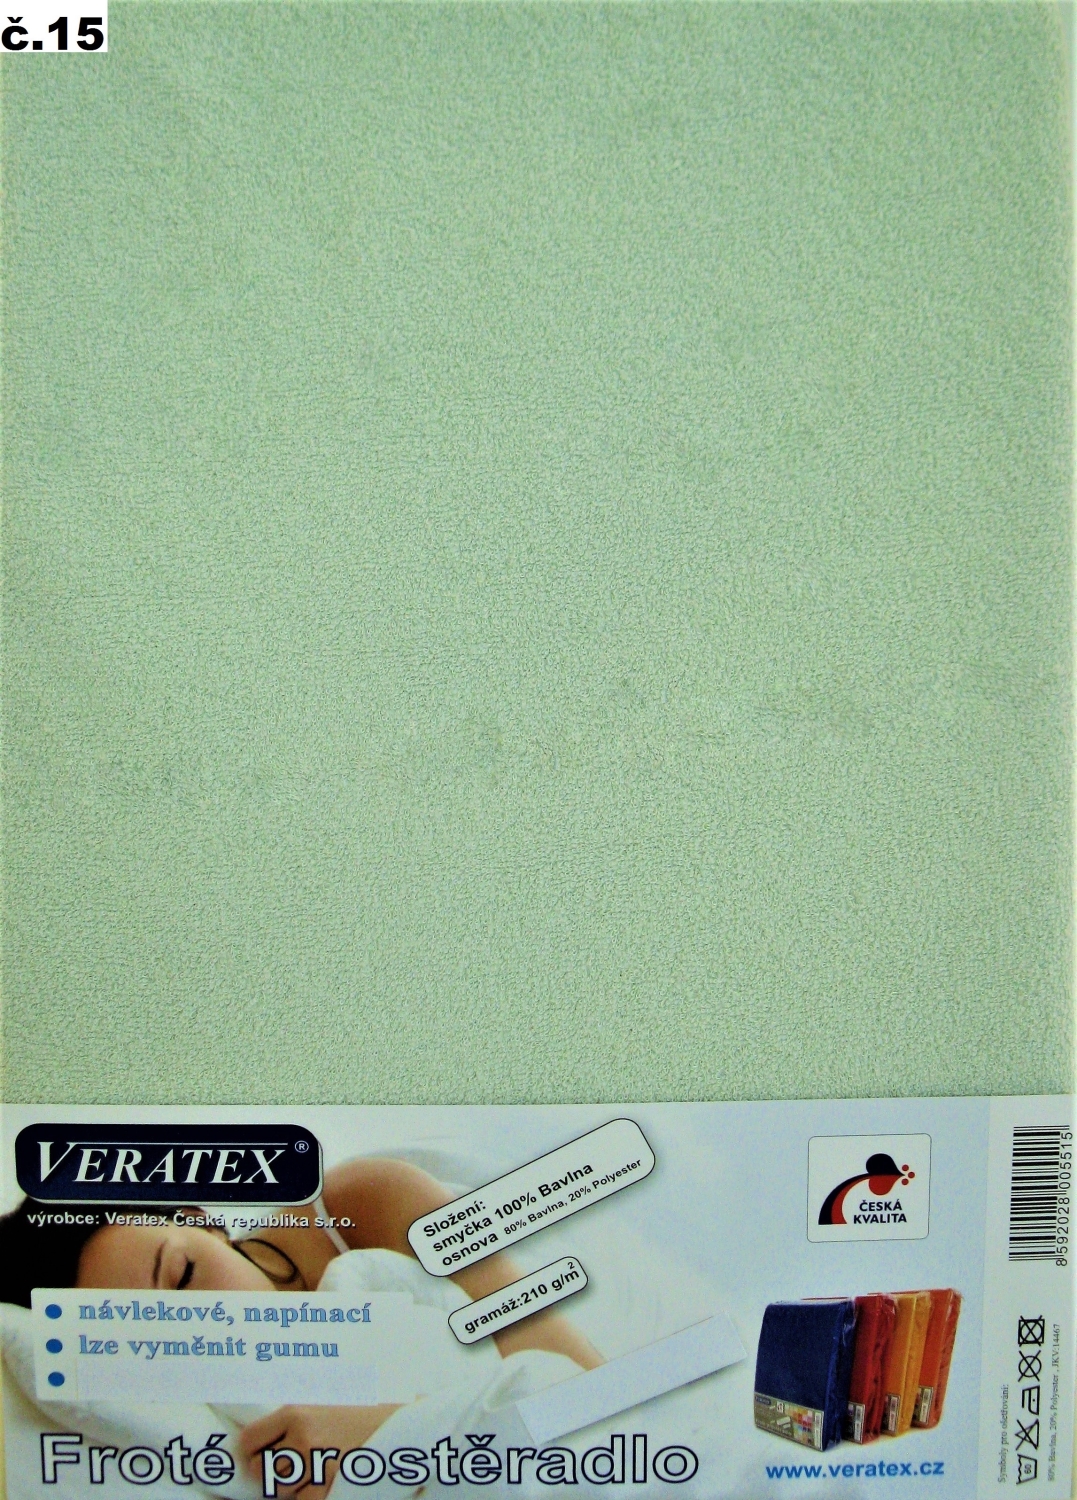 Veratex Froté prostěradlo 90x210/16 cm (č.15 sv.zelená) 90 x 210 cm